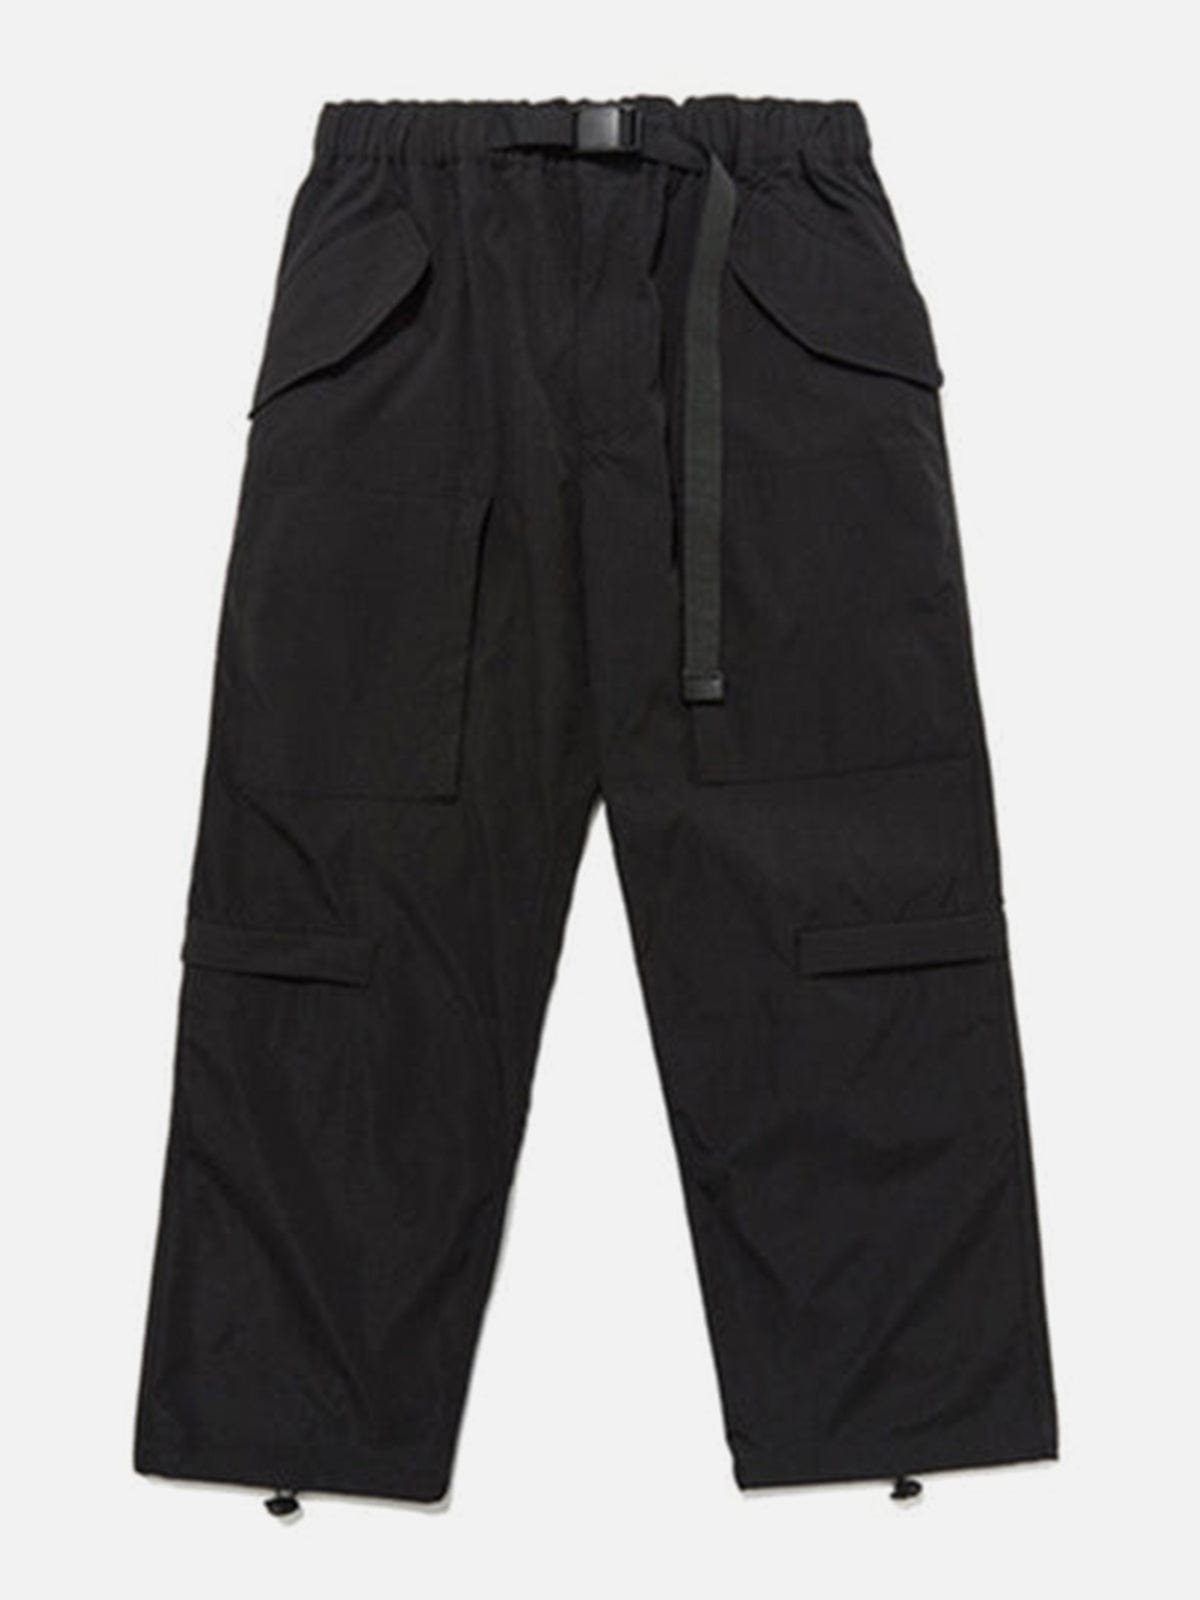 Multi Pockets Zipper Pants Streetwear Brand Techwear Combat Tactical YUGEN THEORY